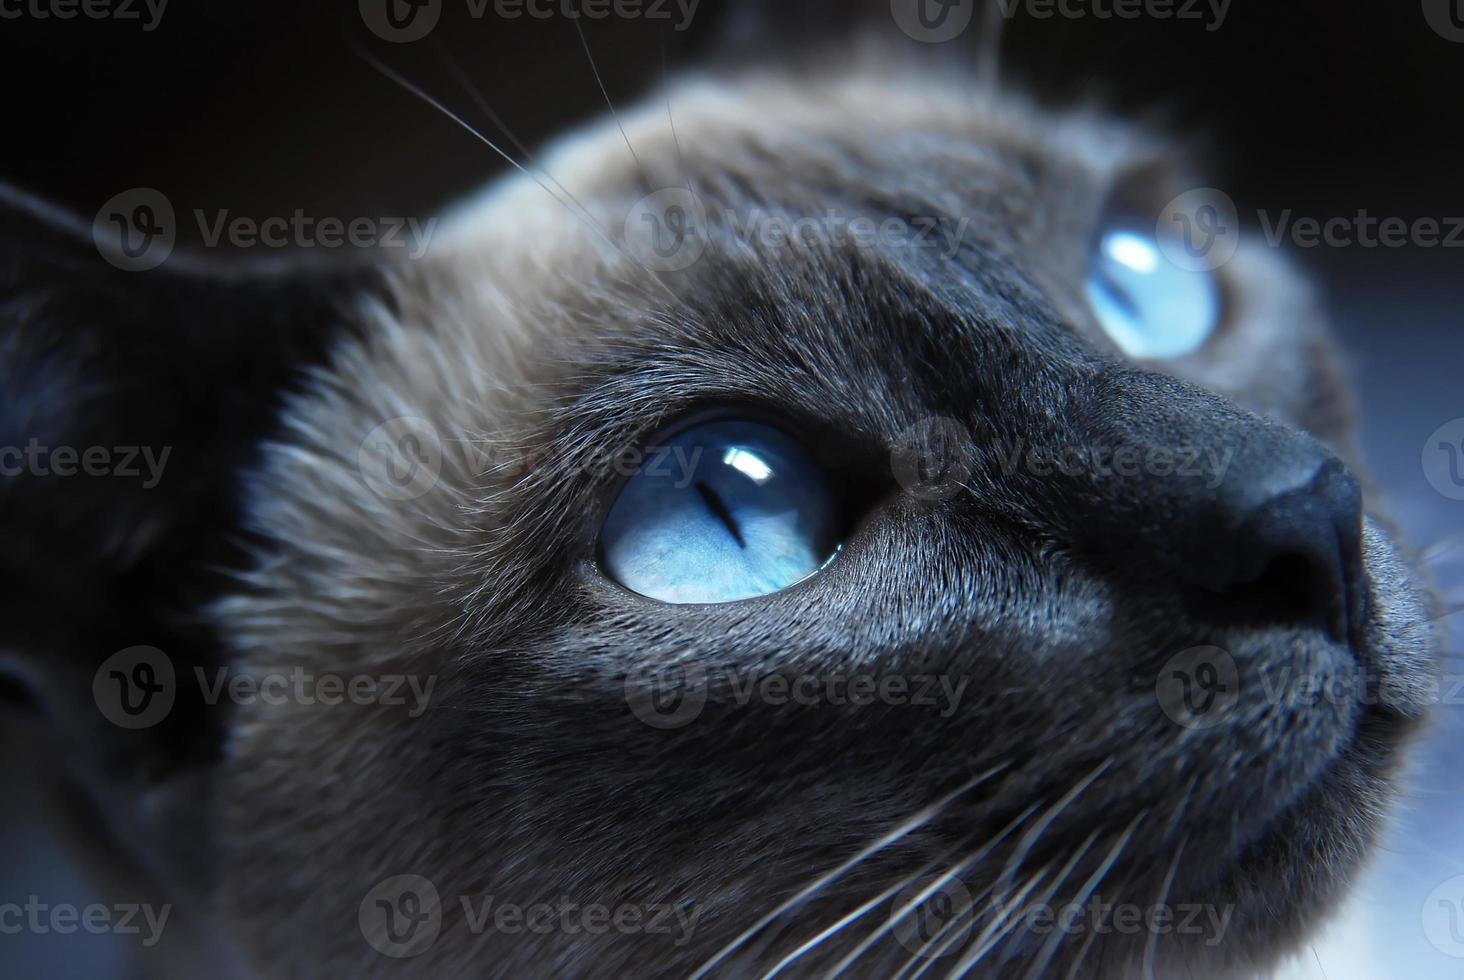 Siamese Cat photo